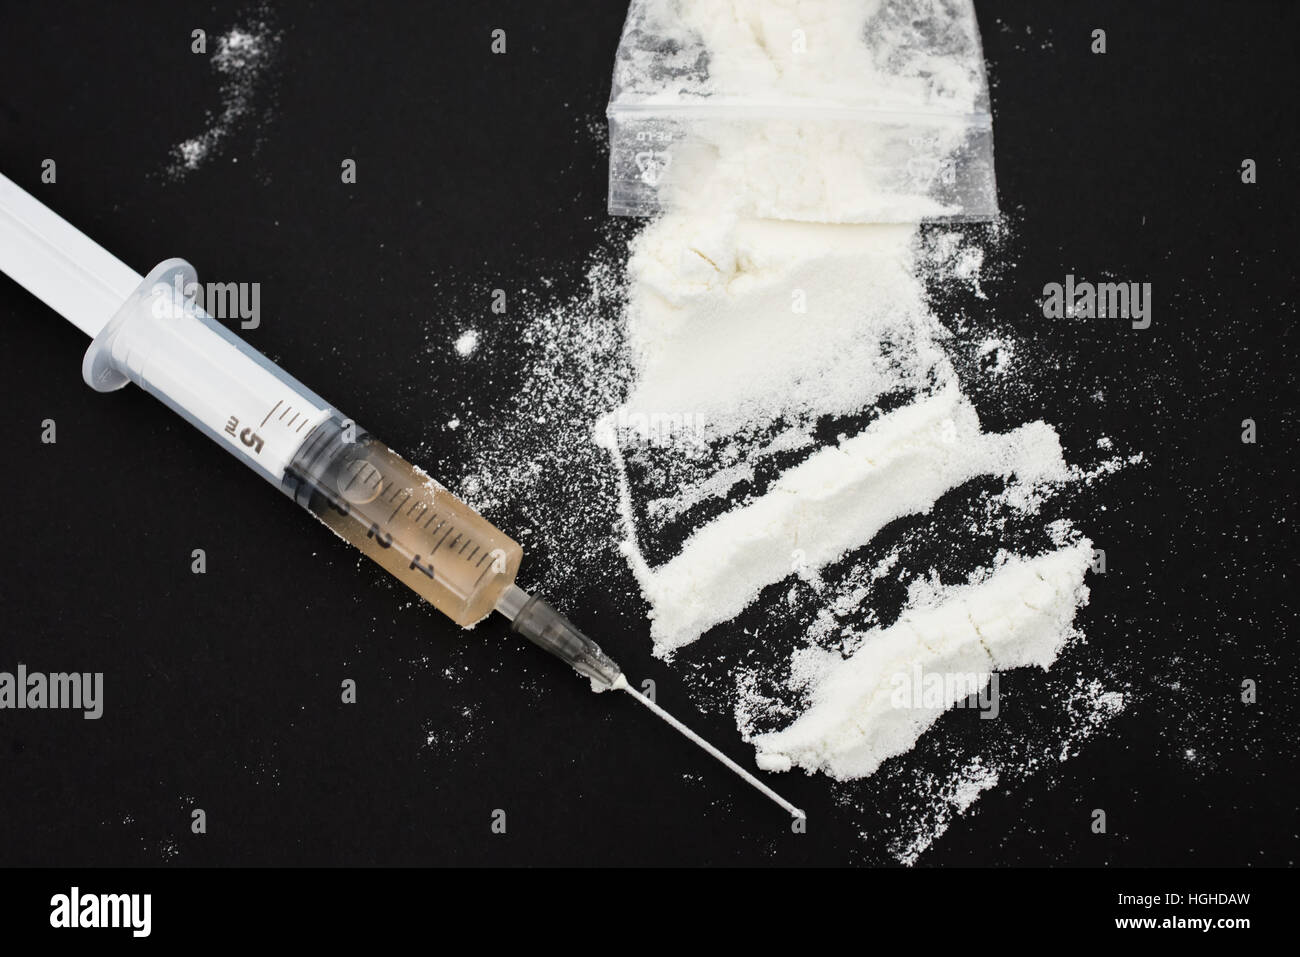 Illegal drug with syringe Stock Photo